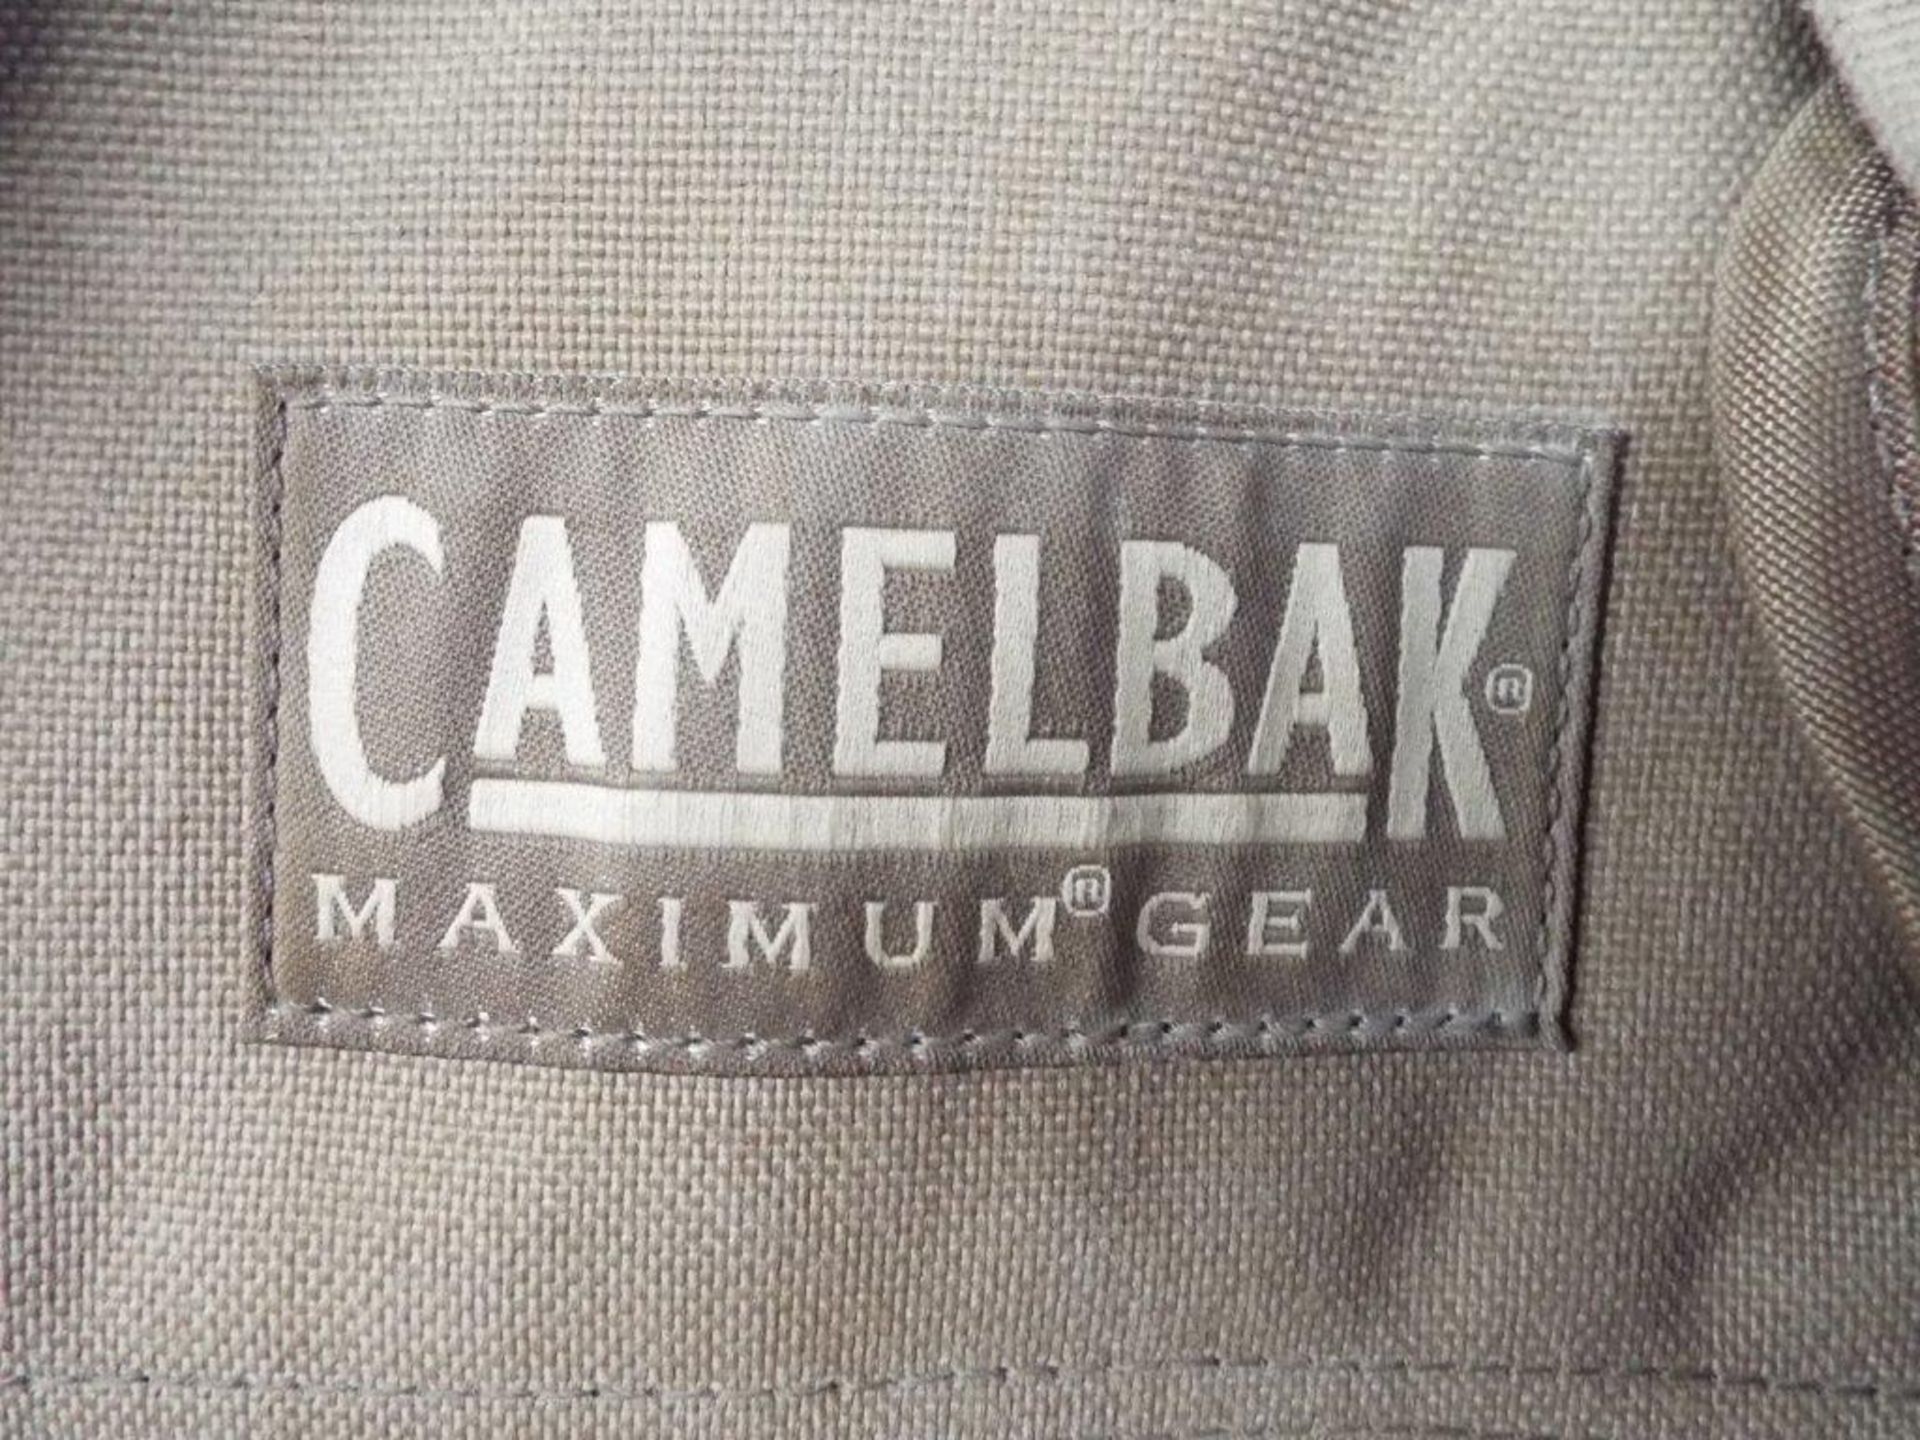 10 x Camelbak Squadbak 25L Military Hydration Backpack - Image 6 of 9